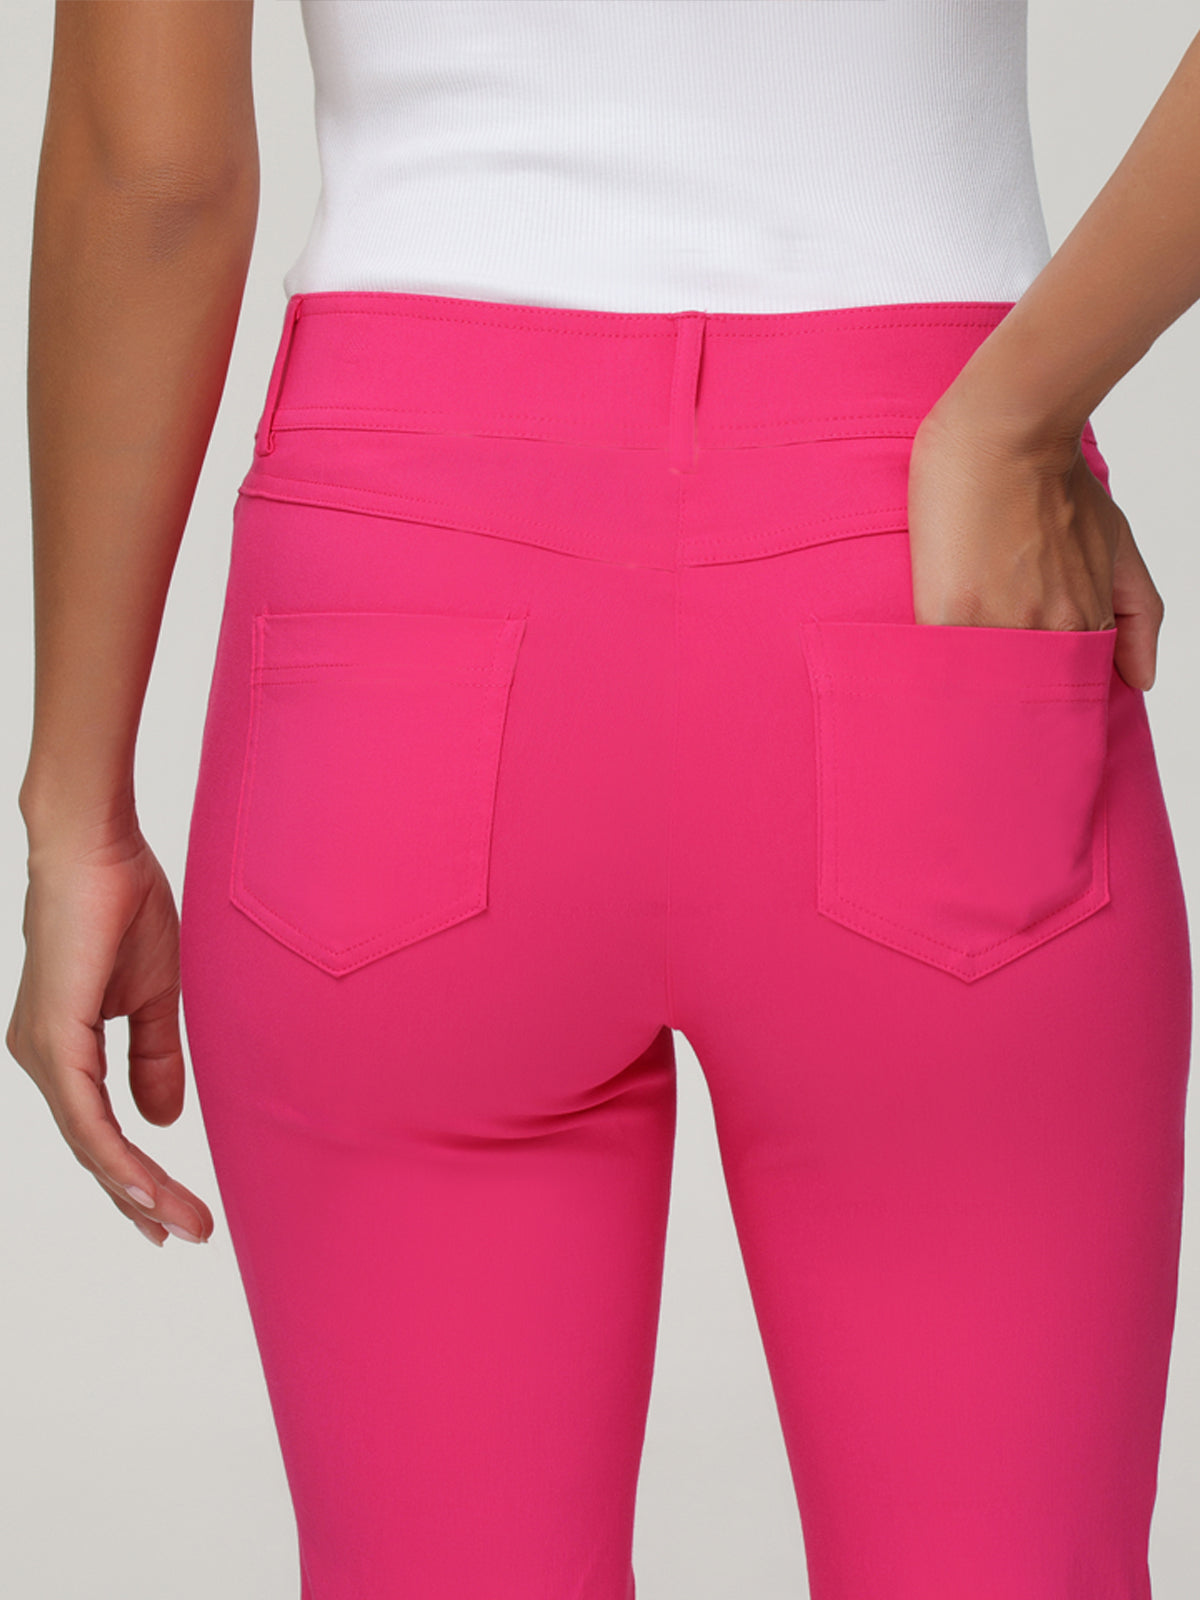 Ross Womens Size 5 Skinny Jeans Navy Zipper Front 5-Pocket Design